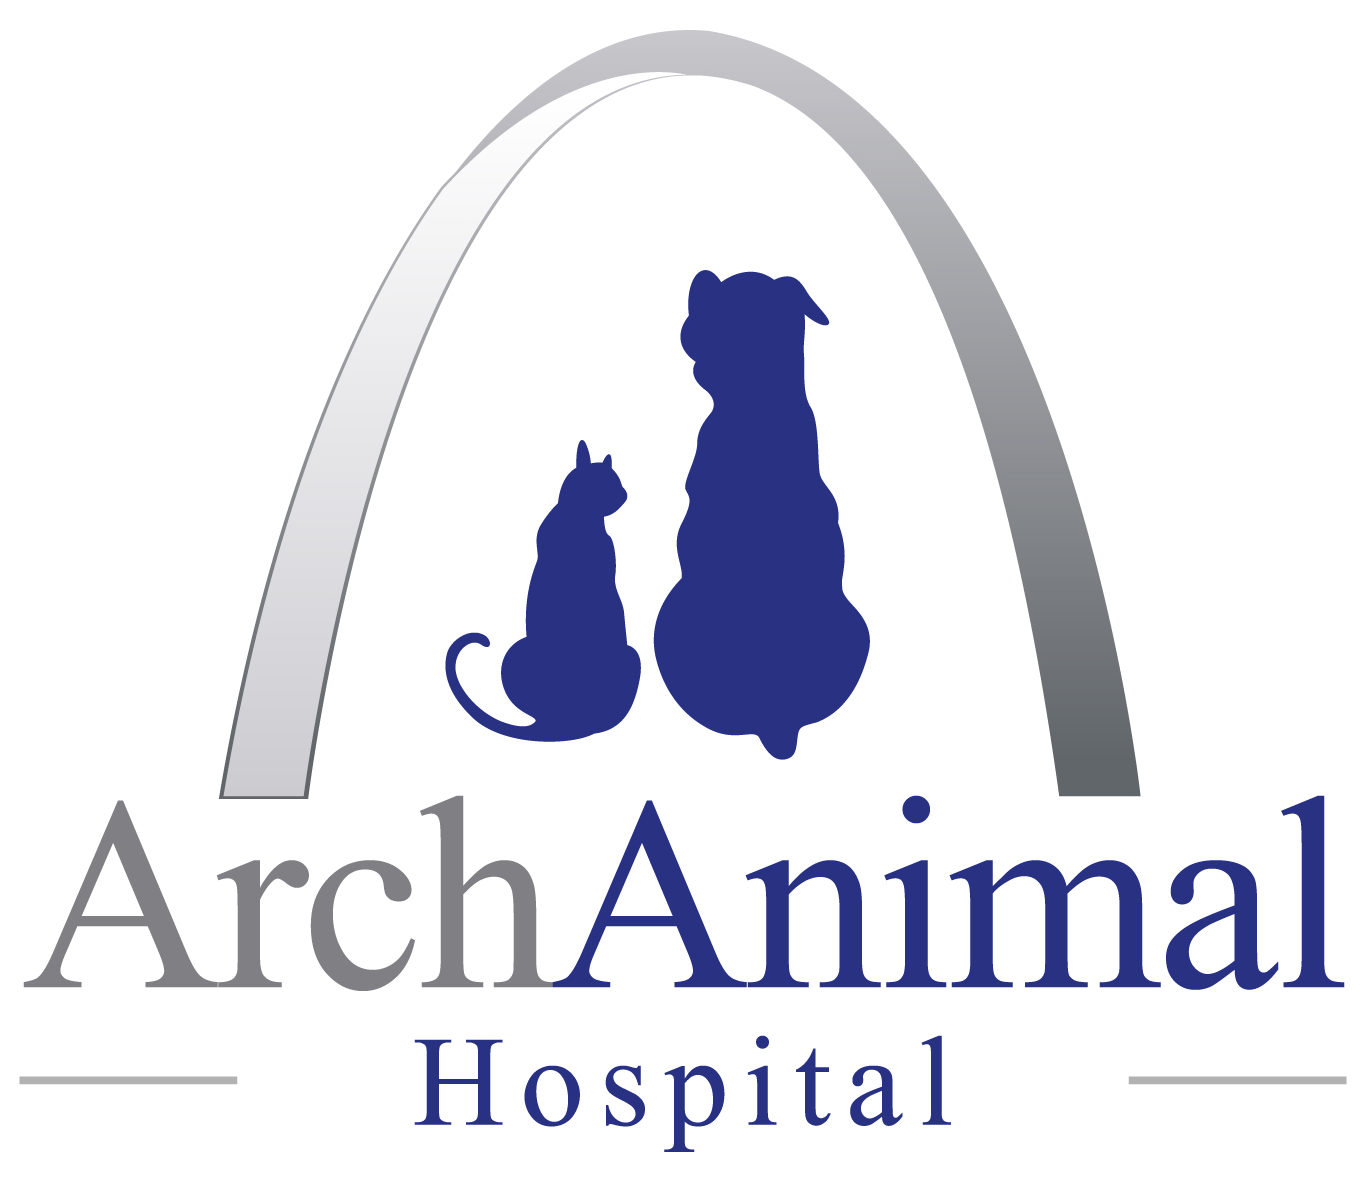 Arch Animal Hospital